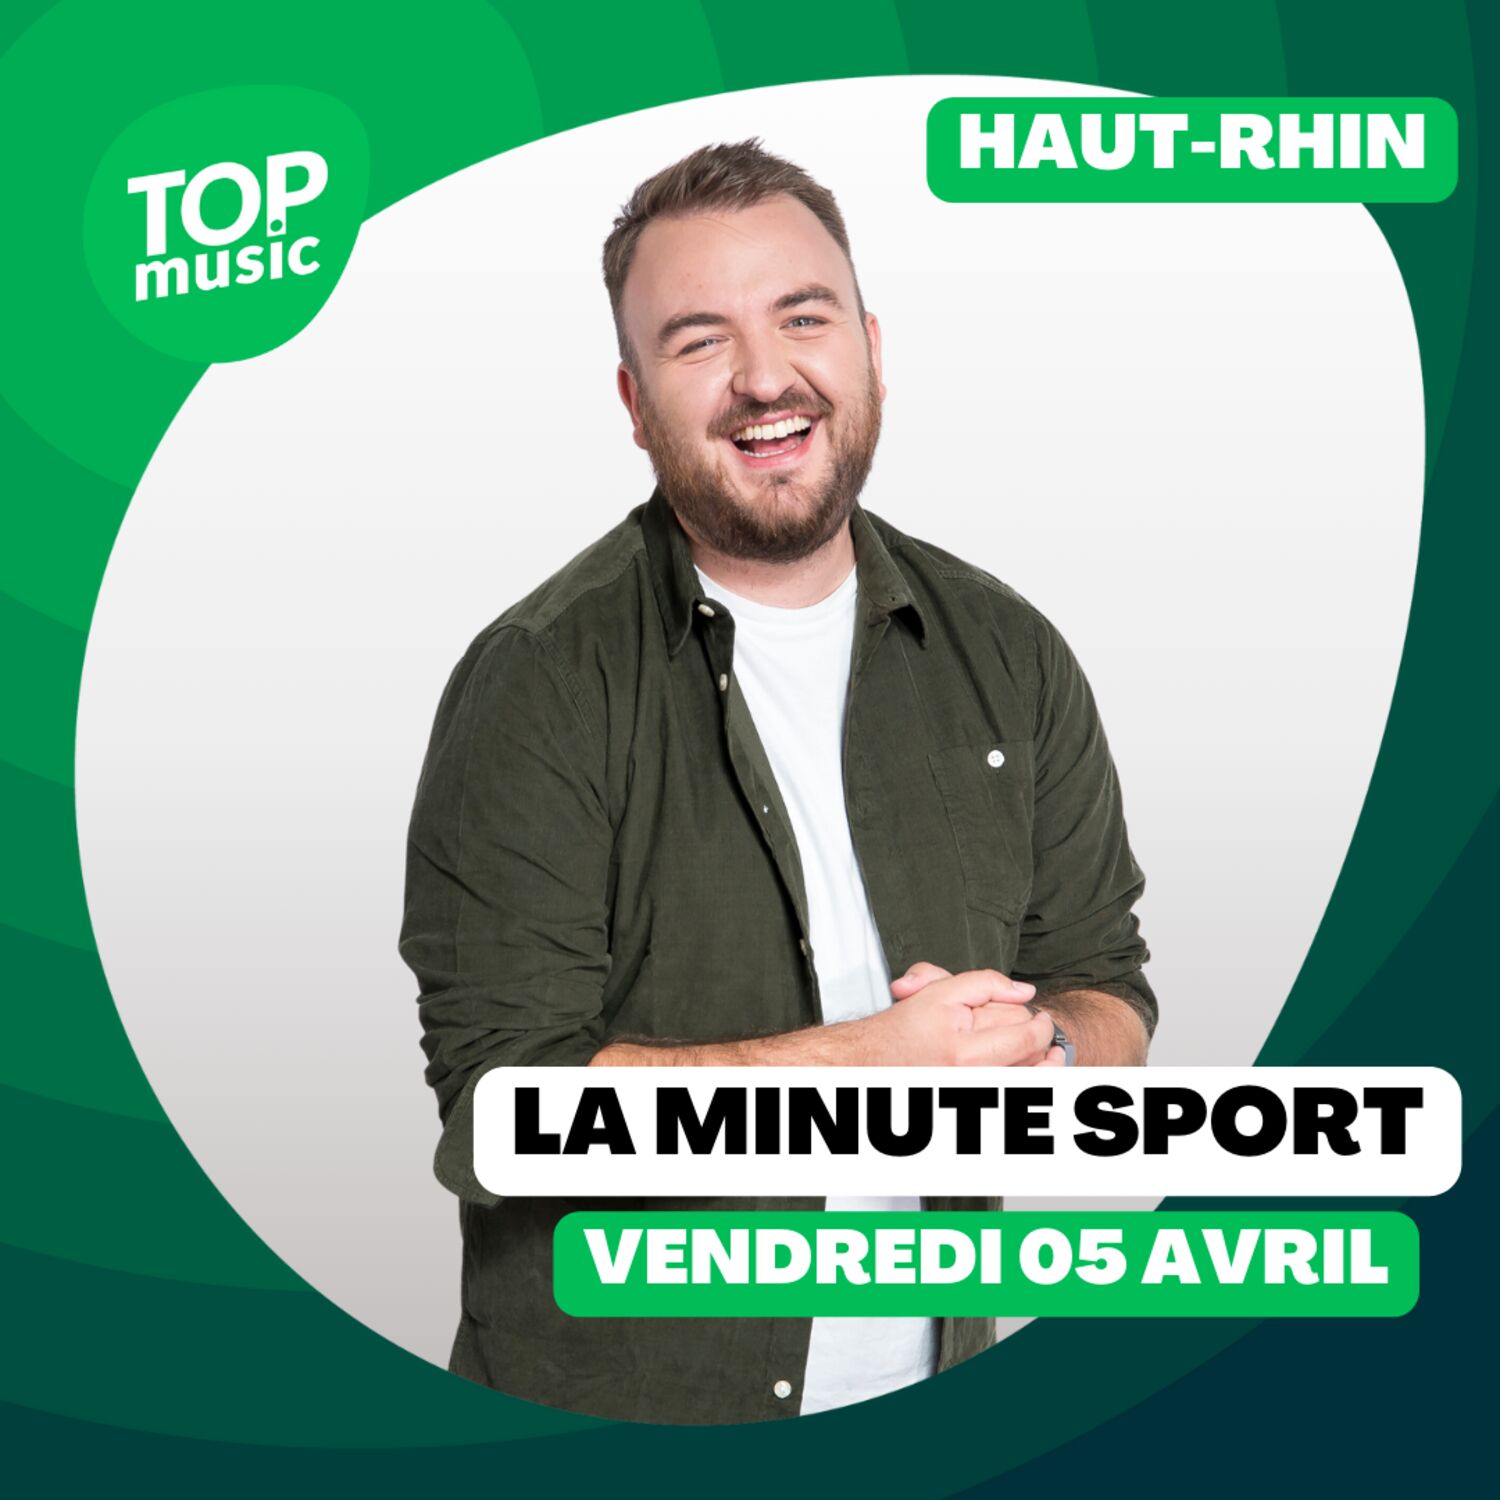 La Minute sport du Haut-Rhin - vendredi 05 avril